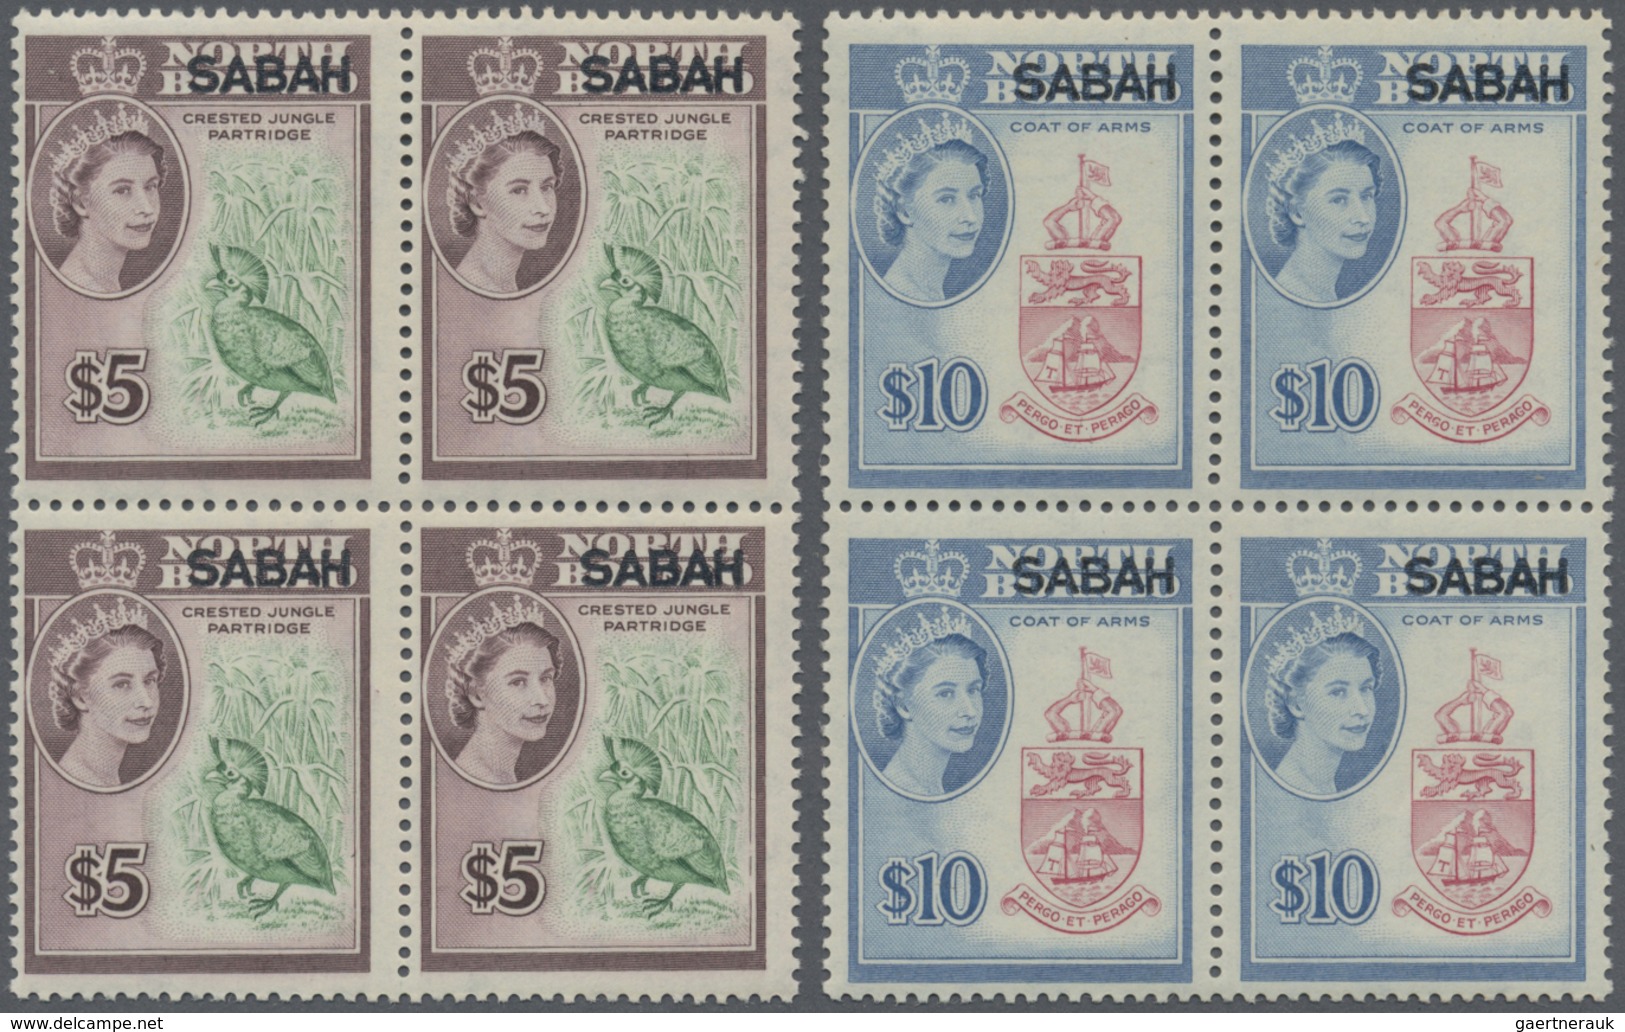 ** Malaiische Staaten - Sabah: 1964, QEII Pictorial Definitives Of North Borneo Optd. 'SABAH' Complete - Sabah